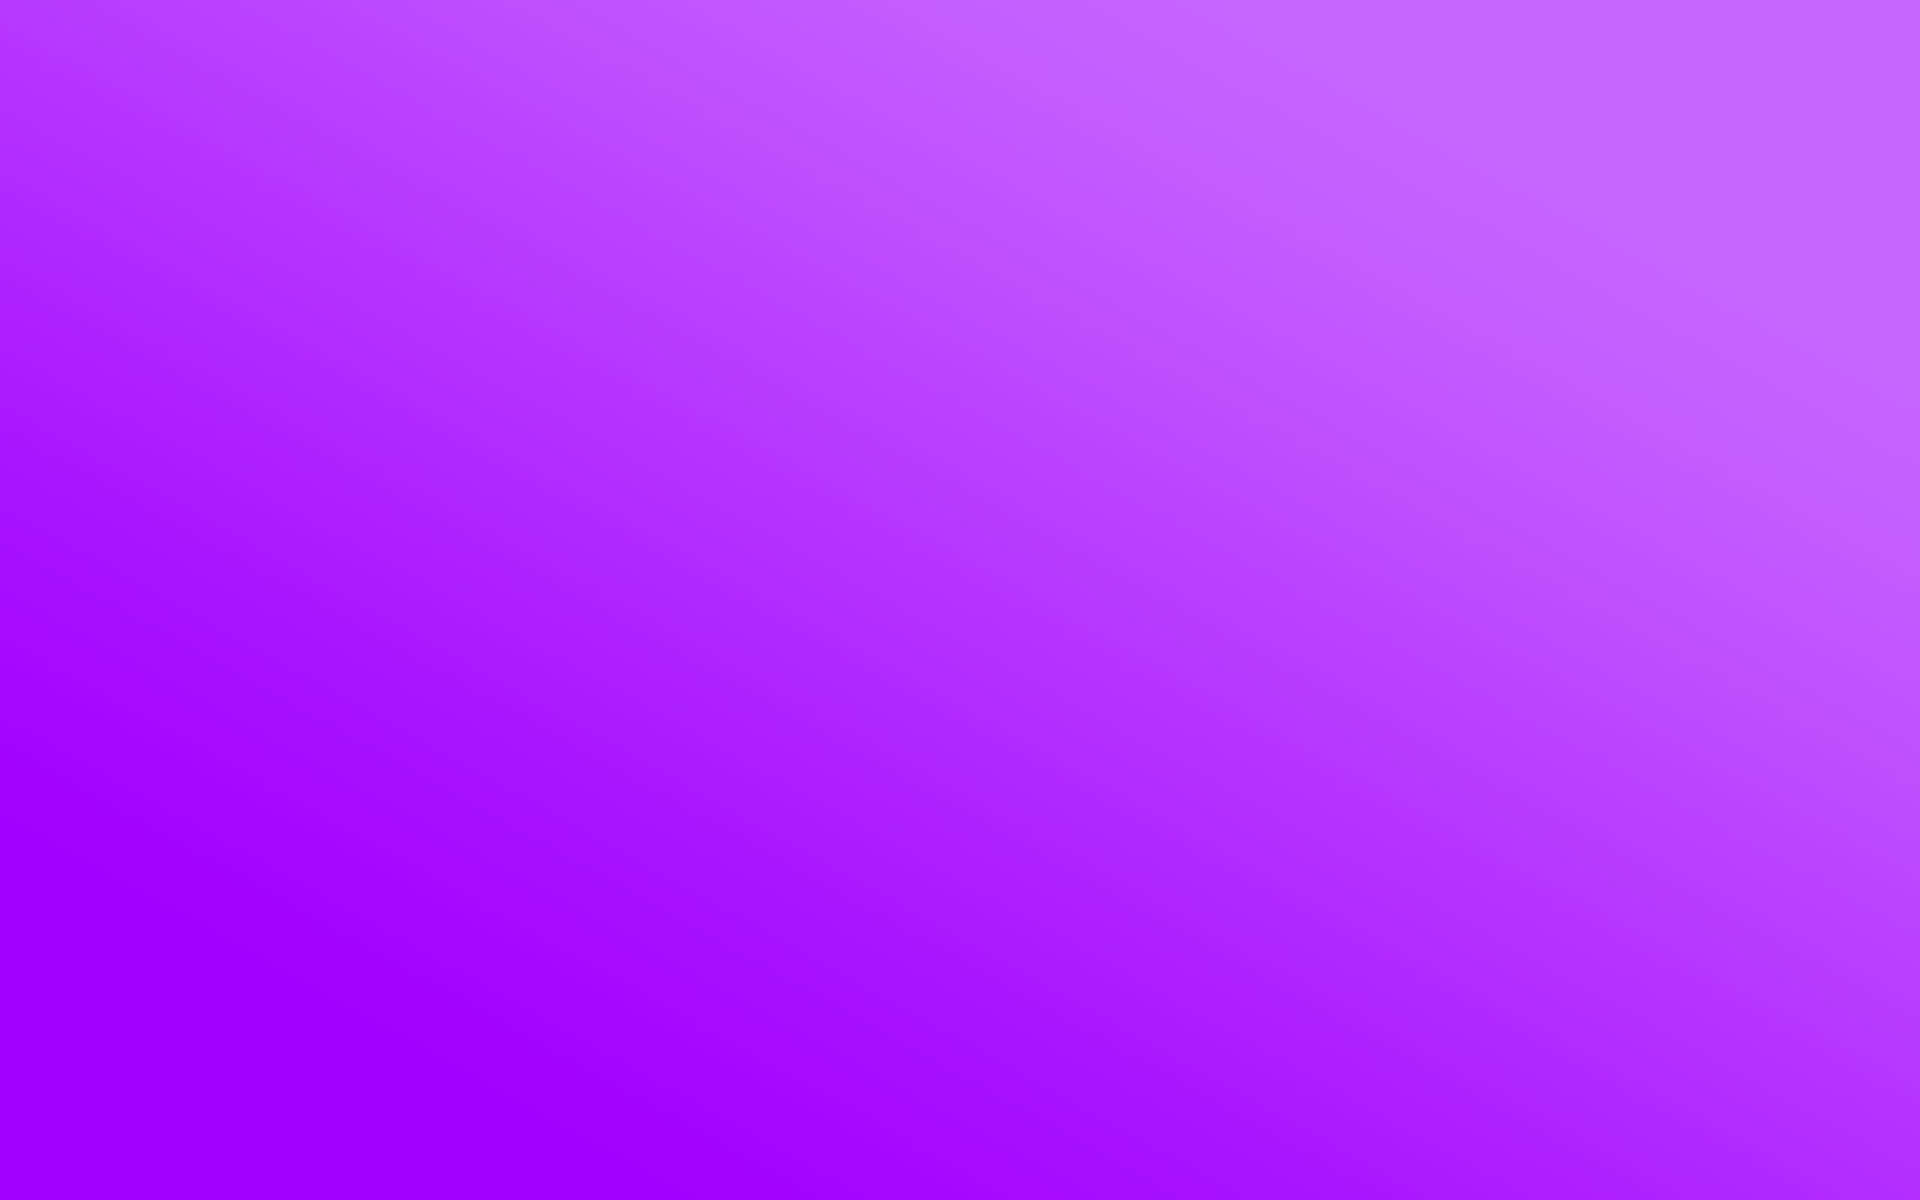 Feel the power of creativity with the Purple Desktop Wallpaper